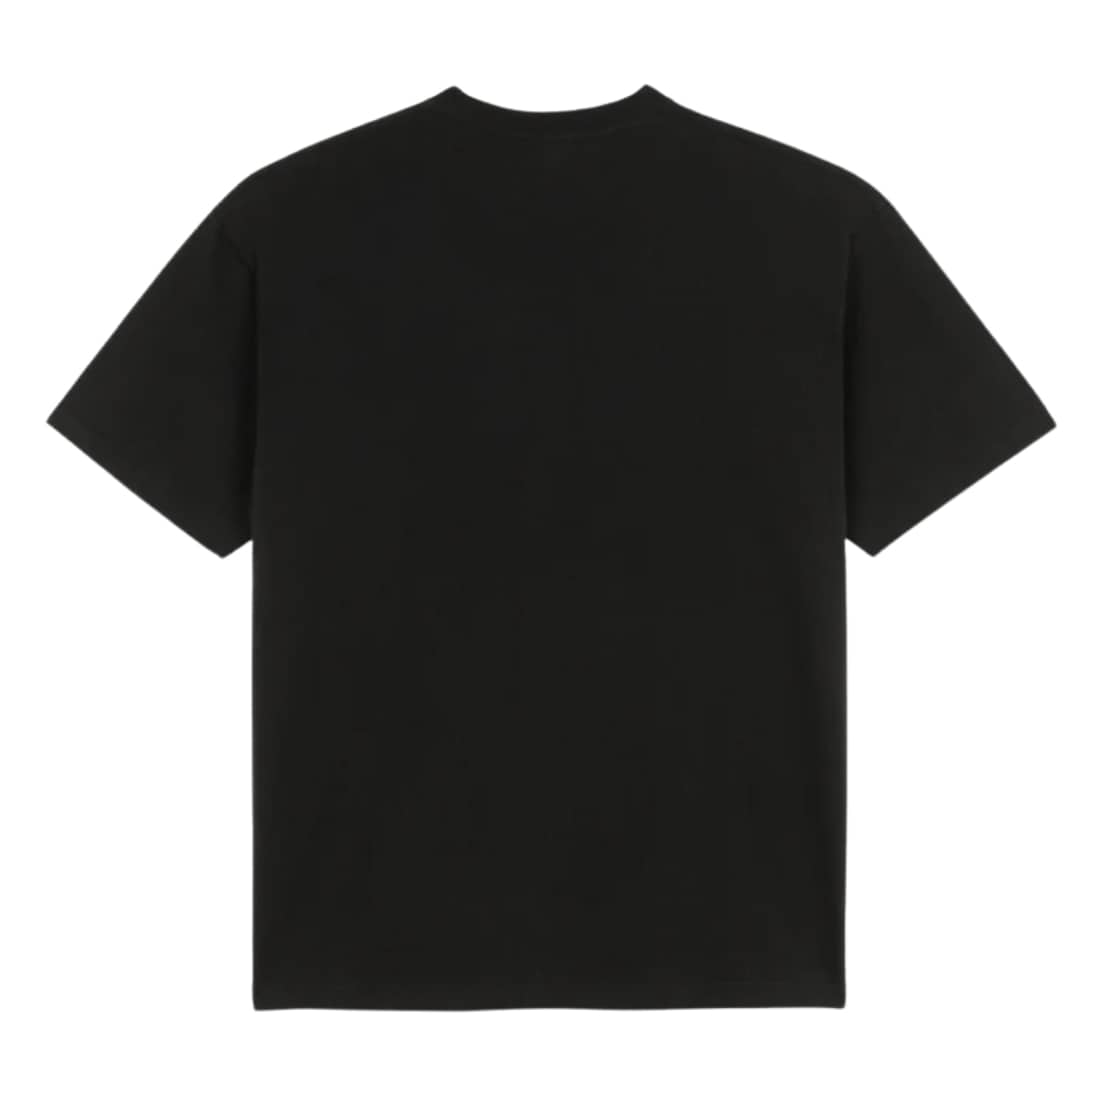 Polar Spiderweb T-Shirt - Black - Mens Graphic T-Shirt by Polar